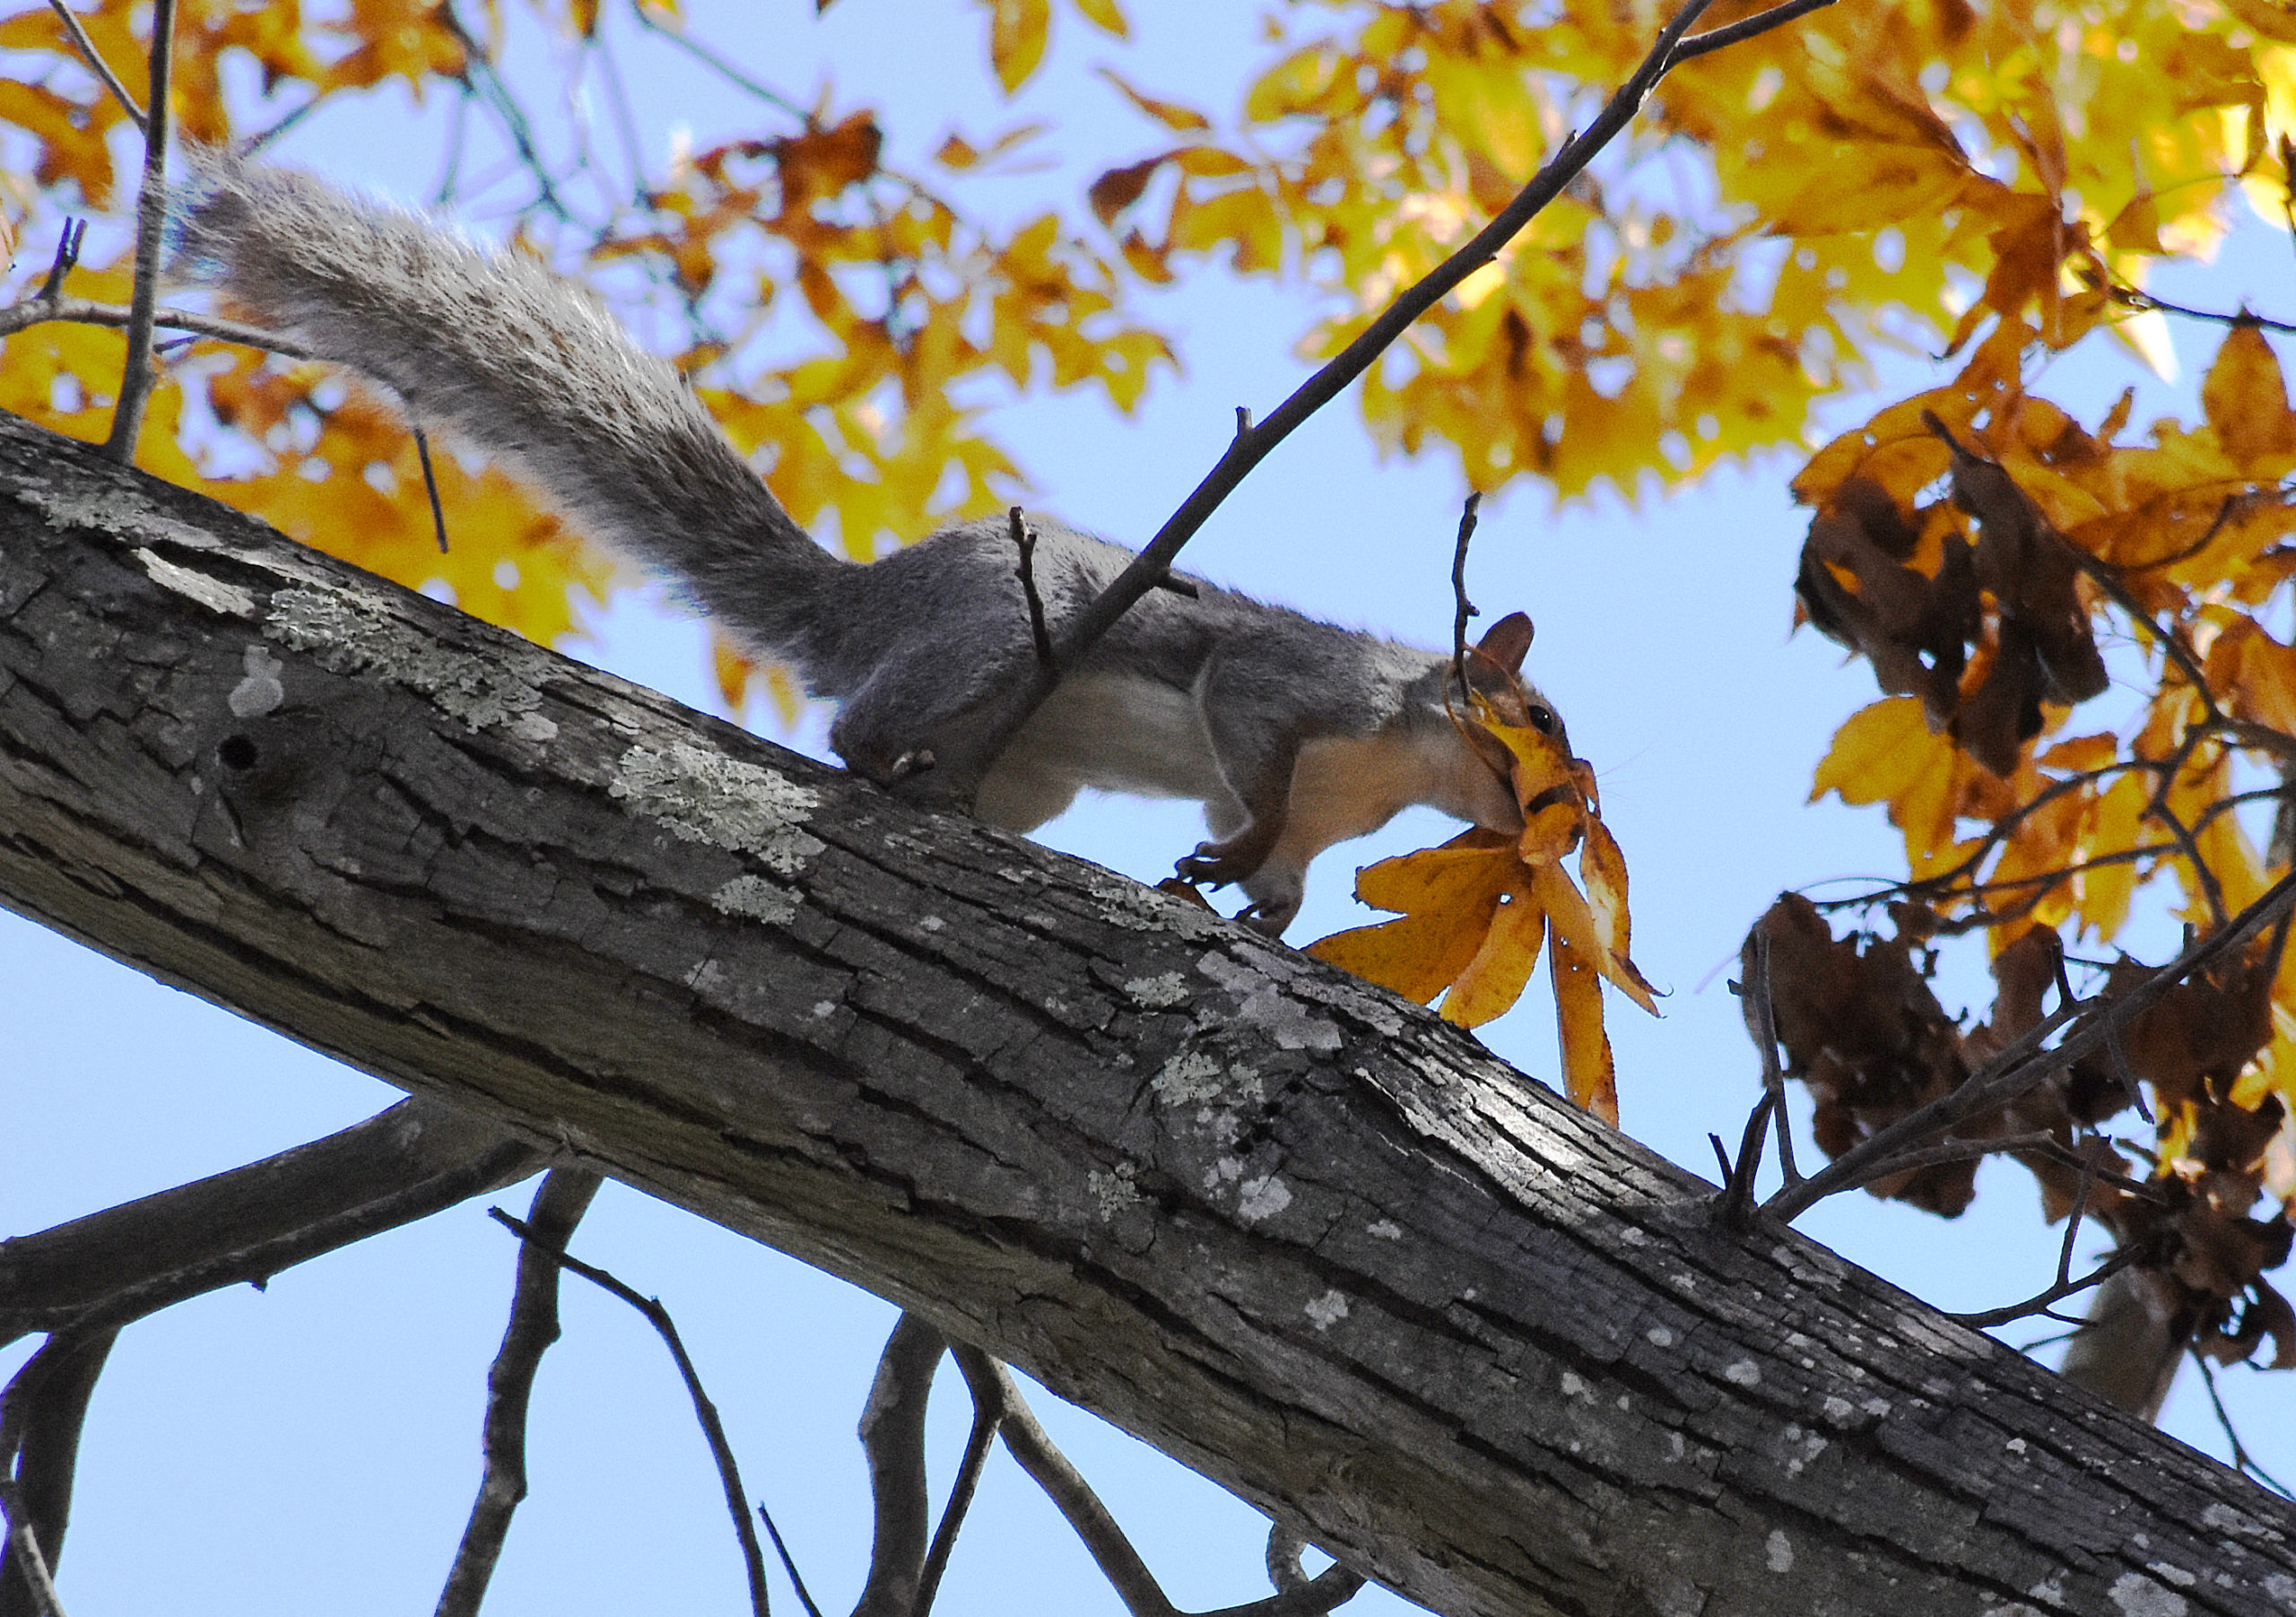 A squirrel making a nest.